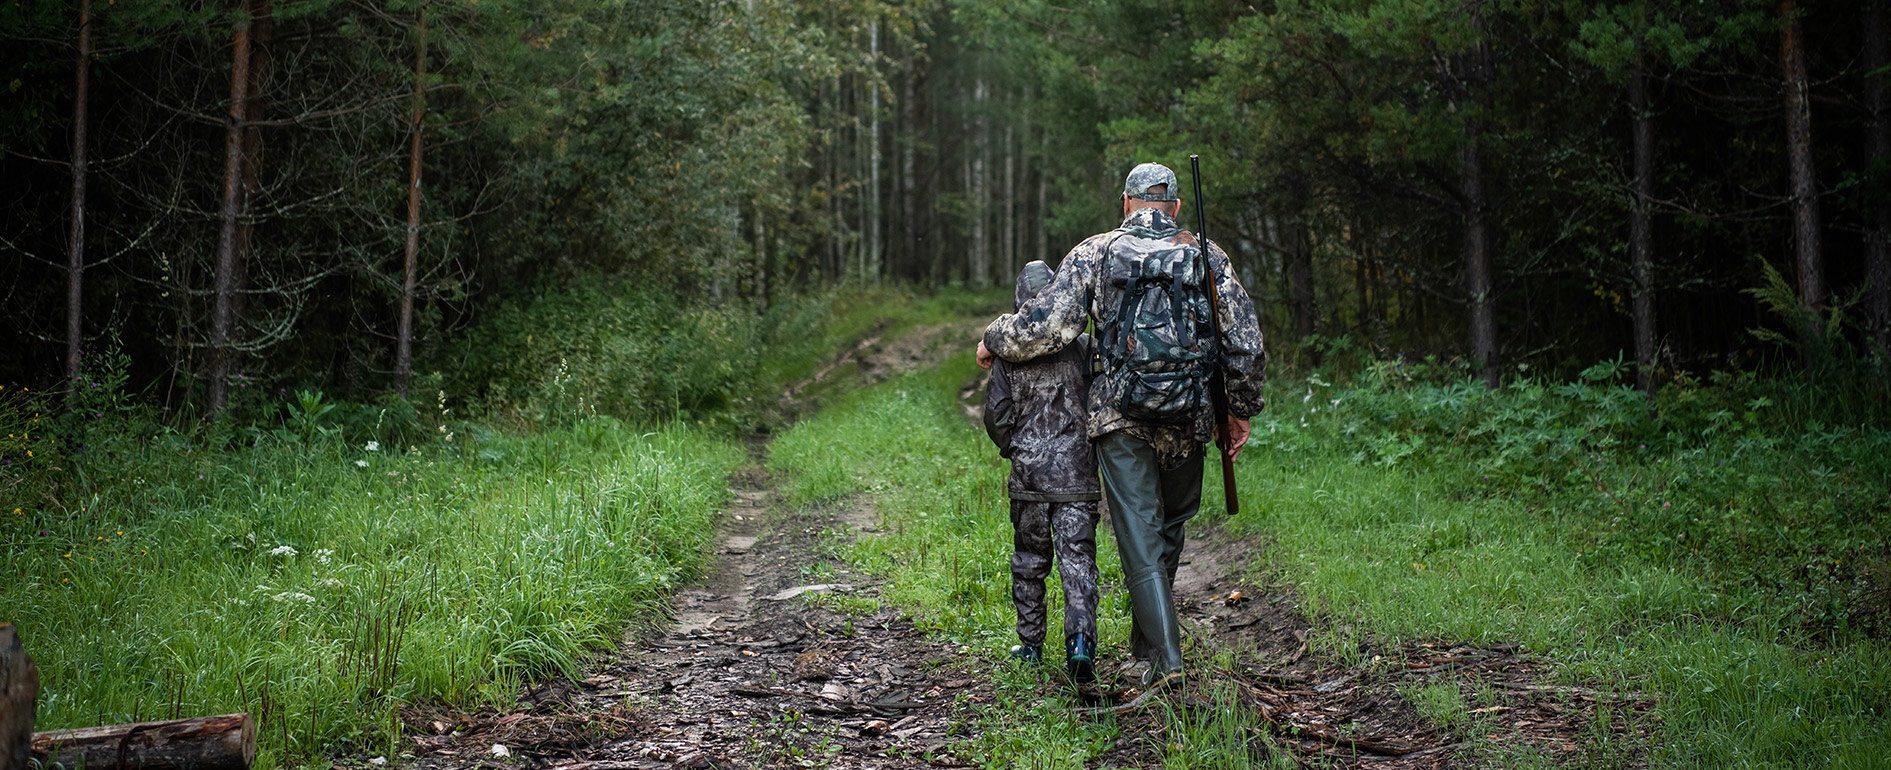 Deer Hunting Gear That Delivers Results - Deer Texas Leases